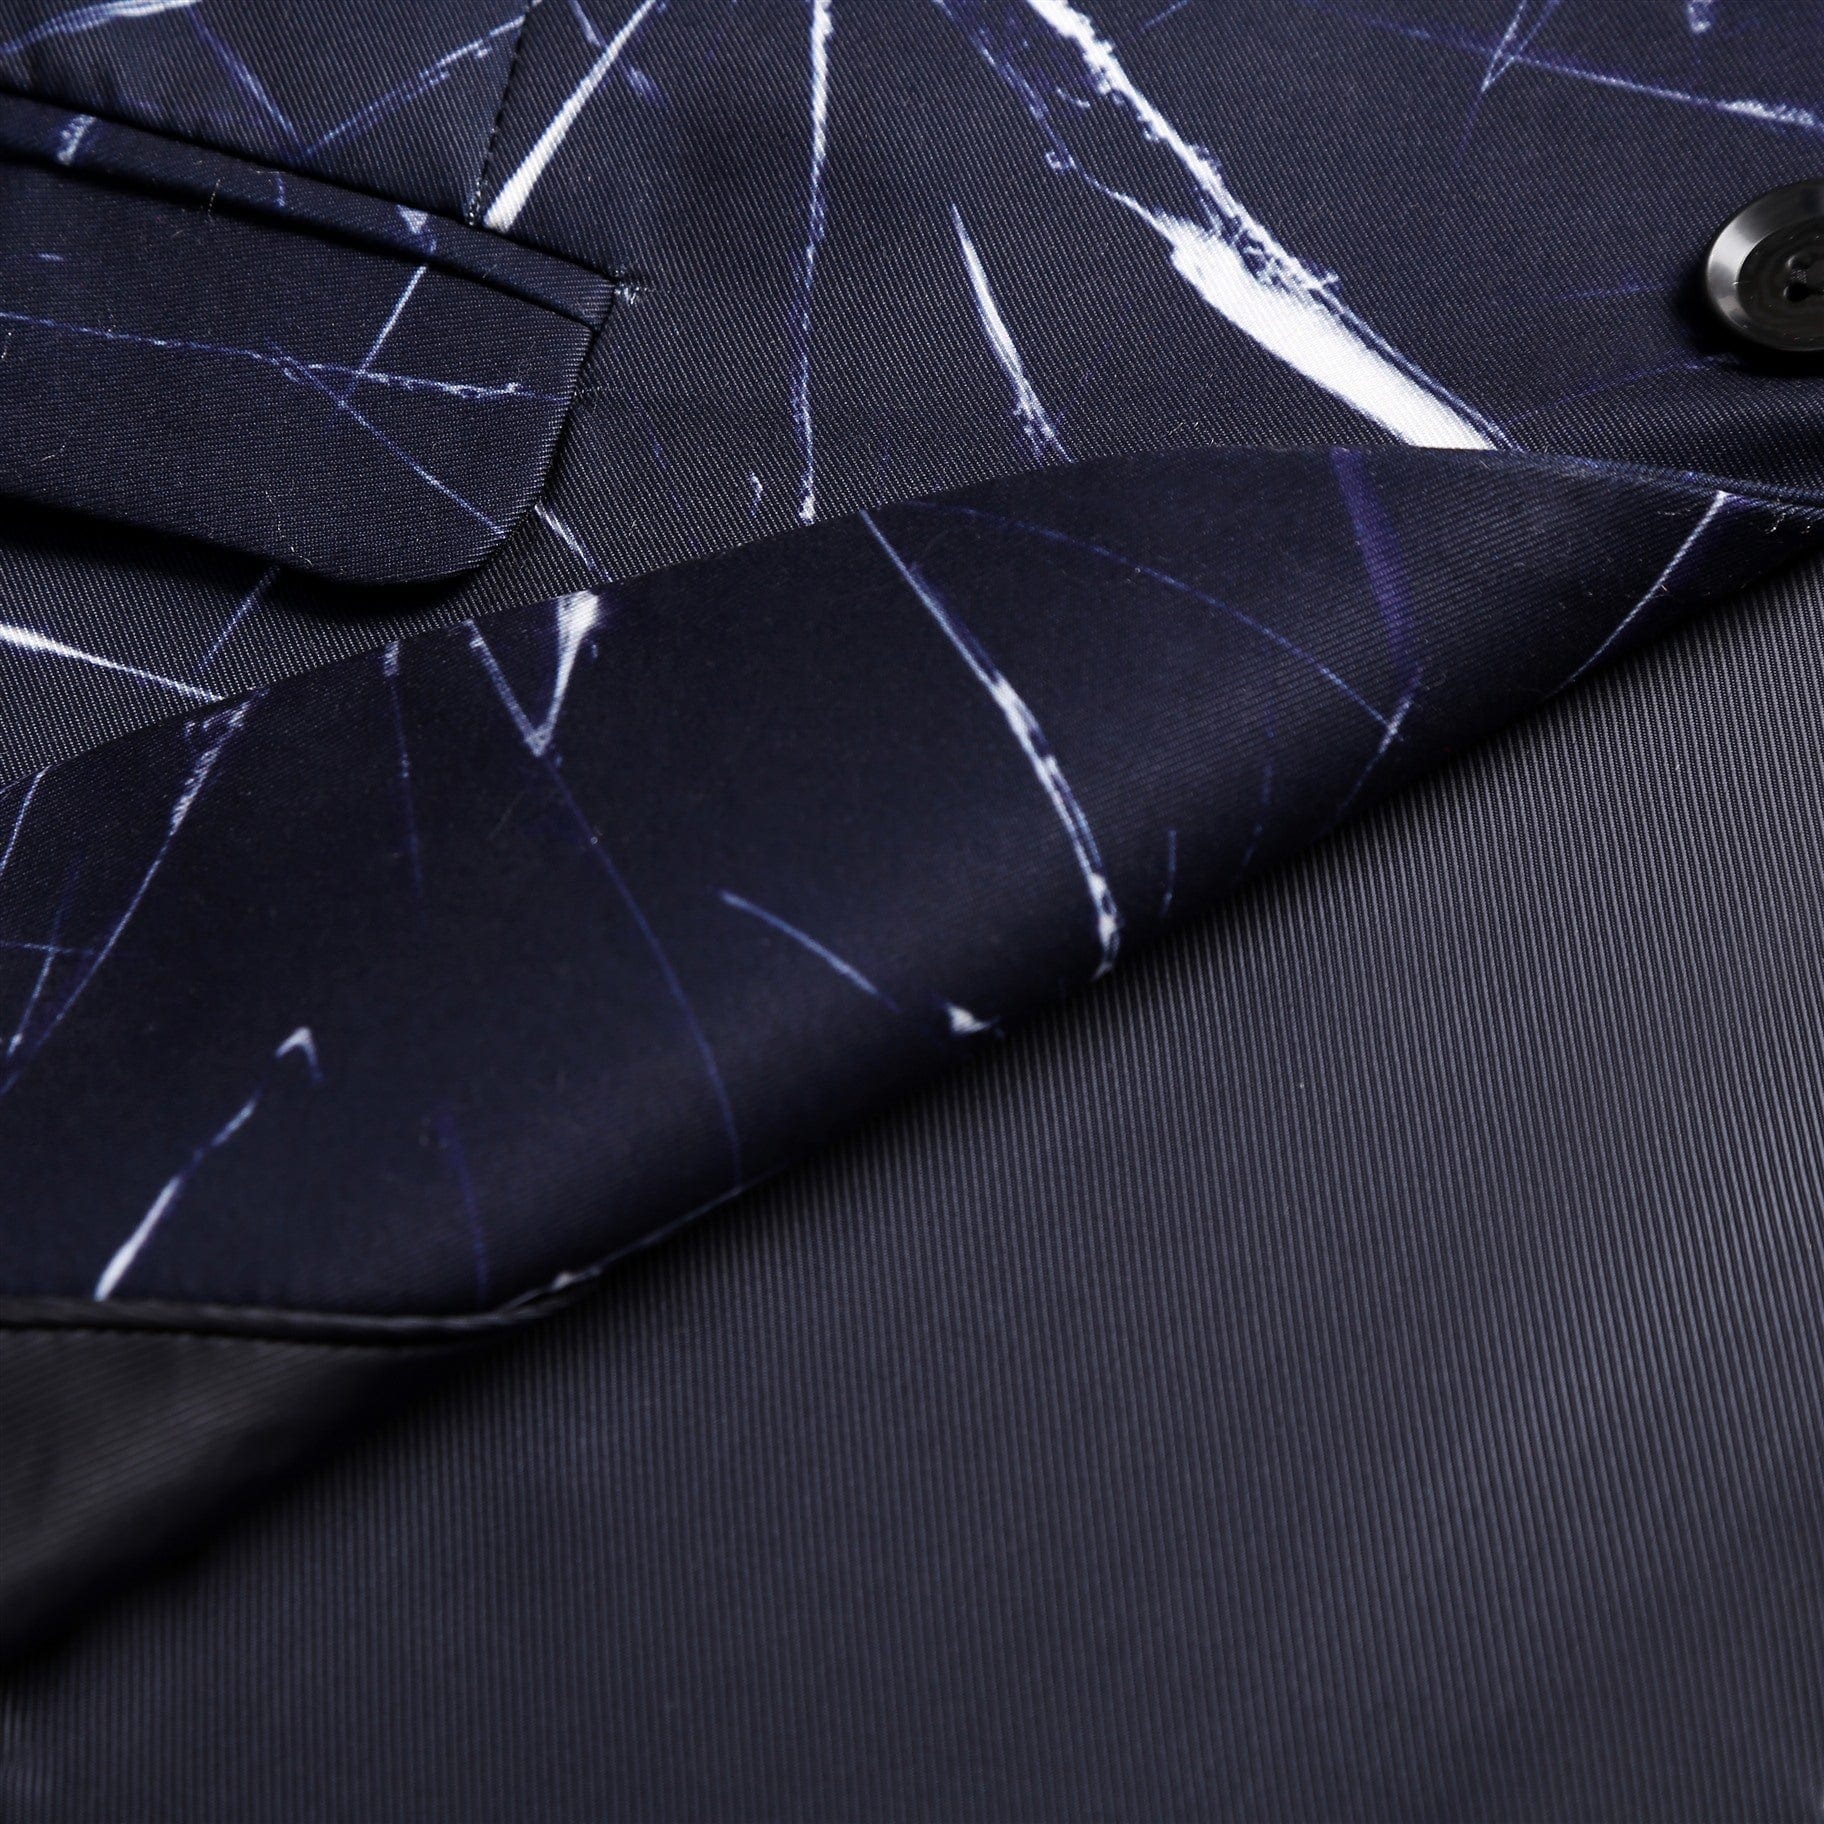 ceehuteey Men's Suit With Cracked Ice Pattern Notch Lapel 2 Piece Fashion Suit (Blazer+Pants)